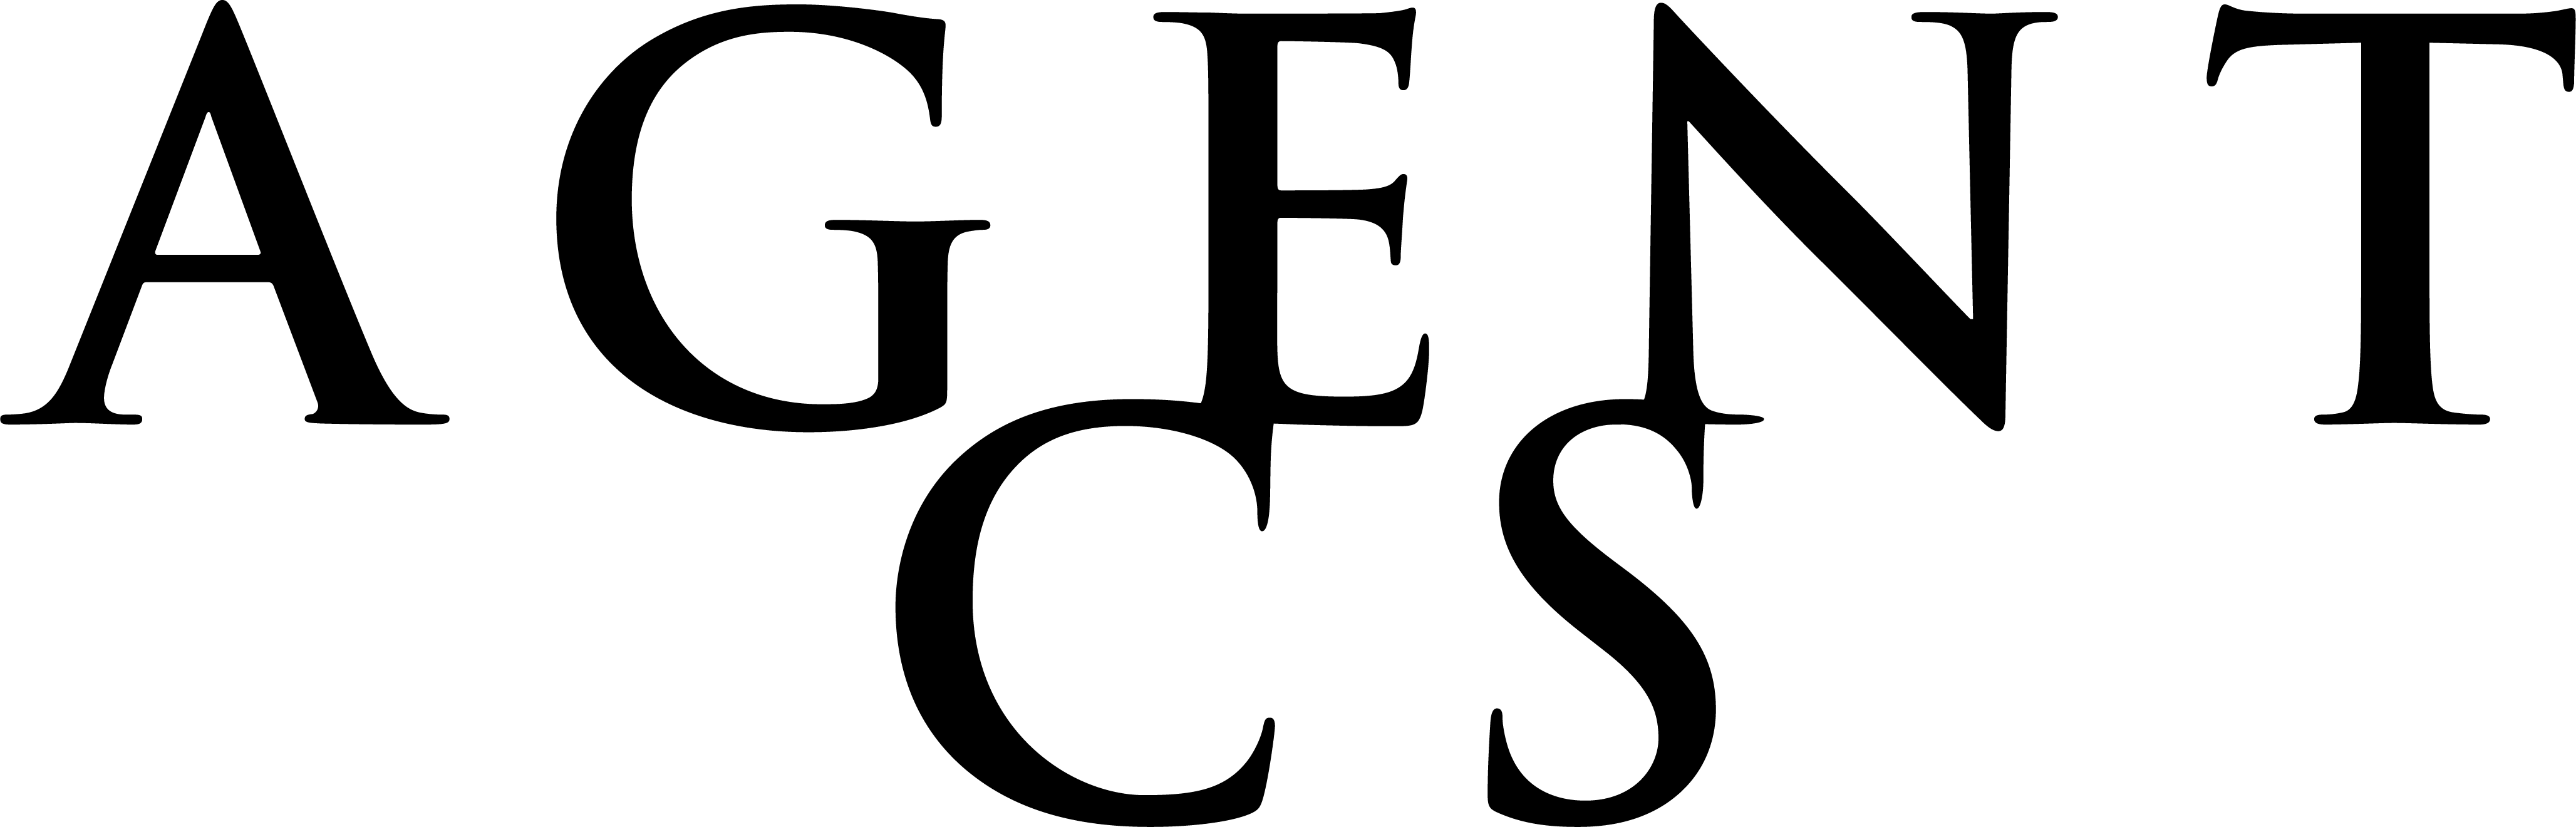 Agent CS GmbH Logo